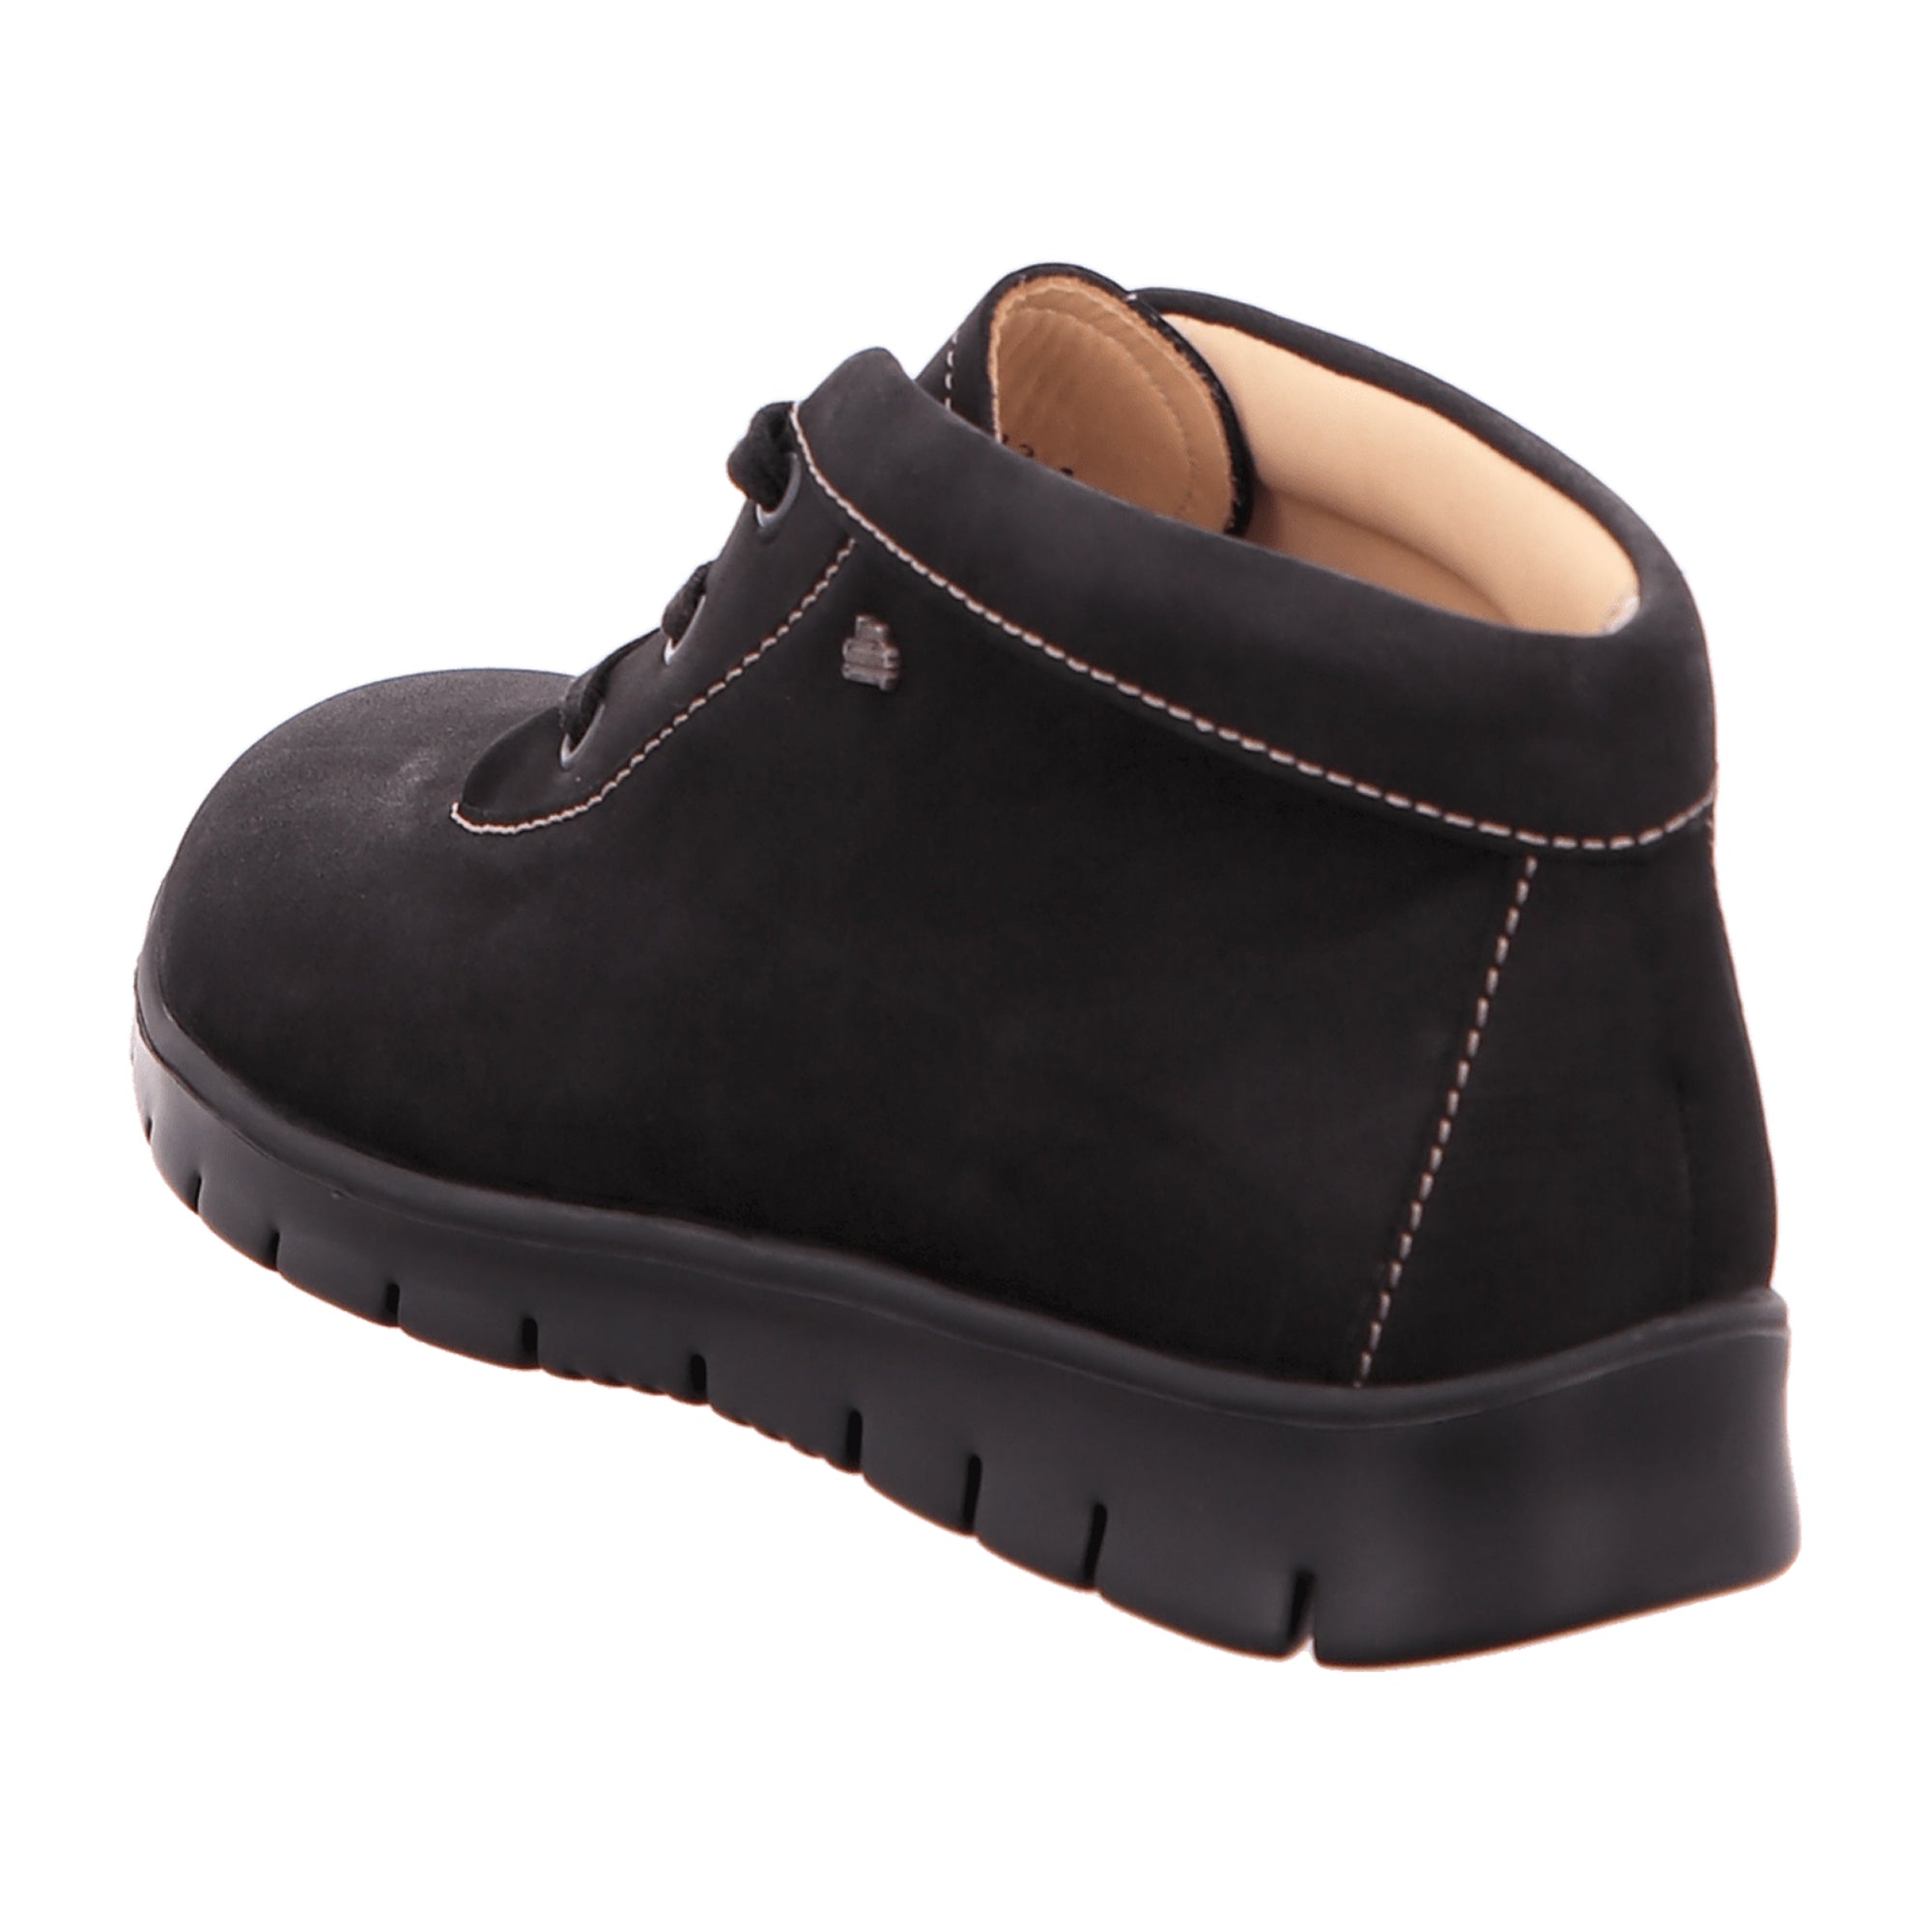 Finn Comfort Leon Women's Comfortable Leather Shoes, Black